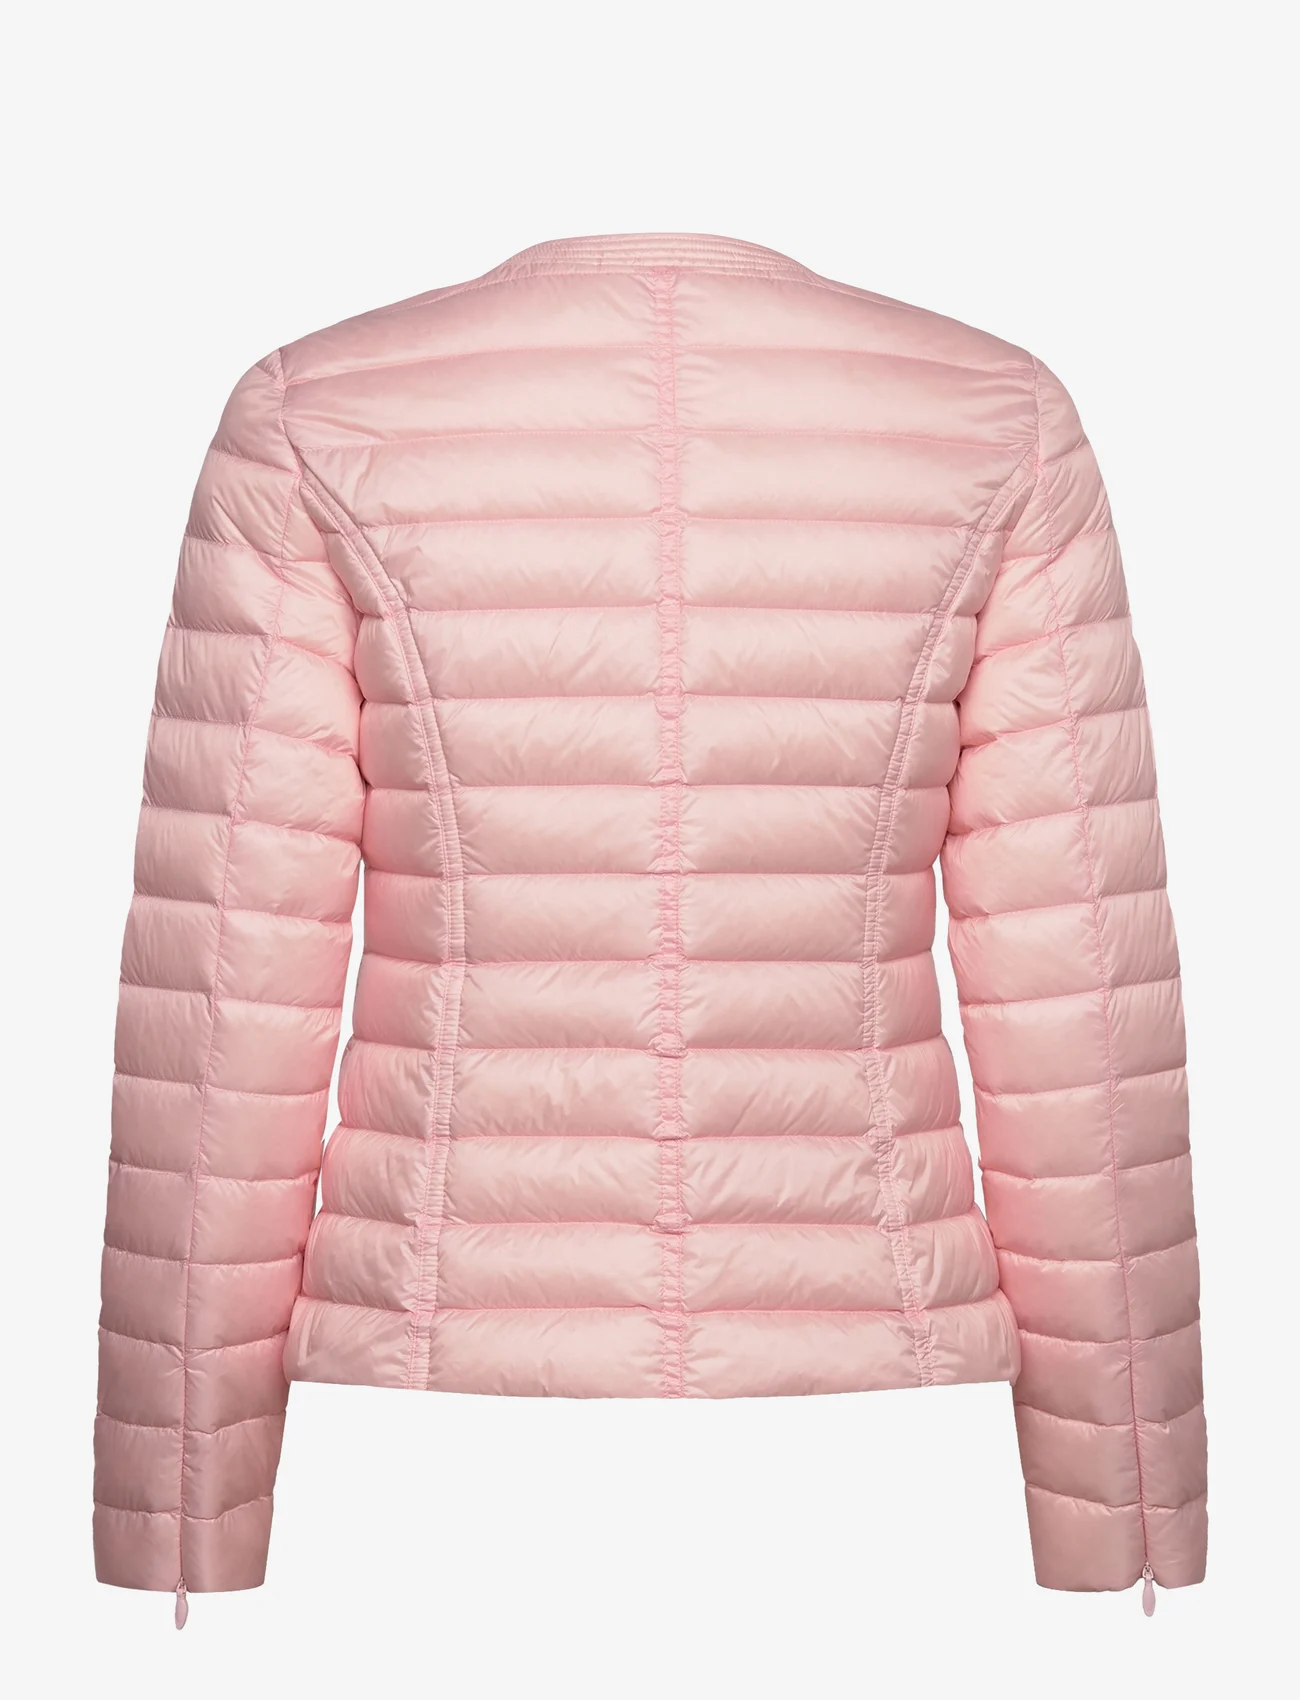 JOTT - Douda ML col O basique - winter jackets - rose clair - 1